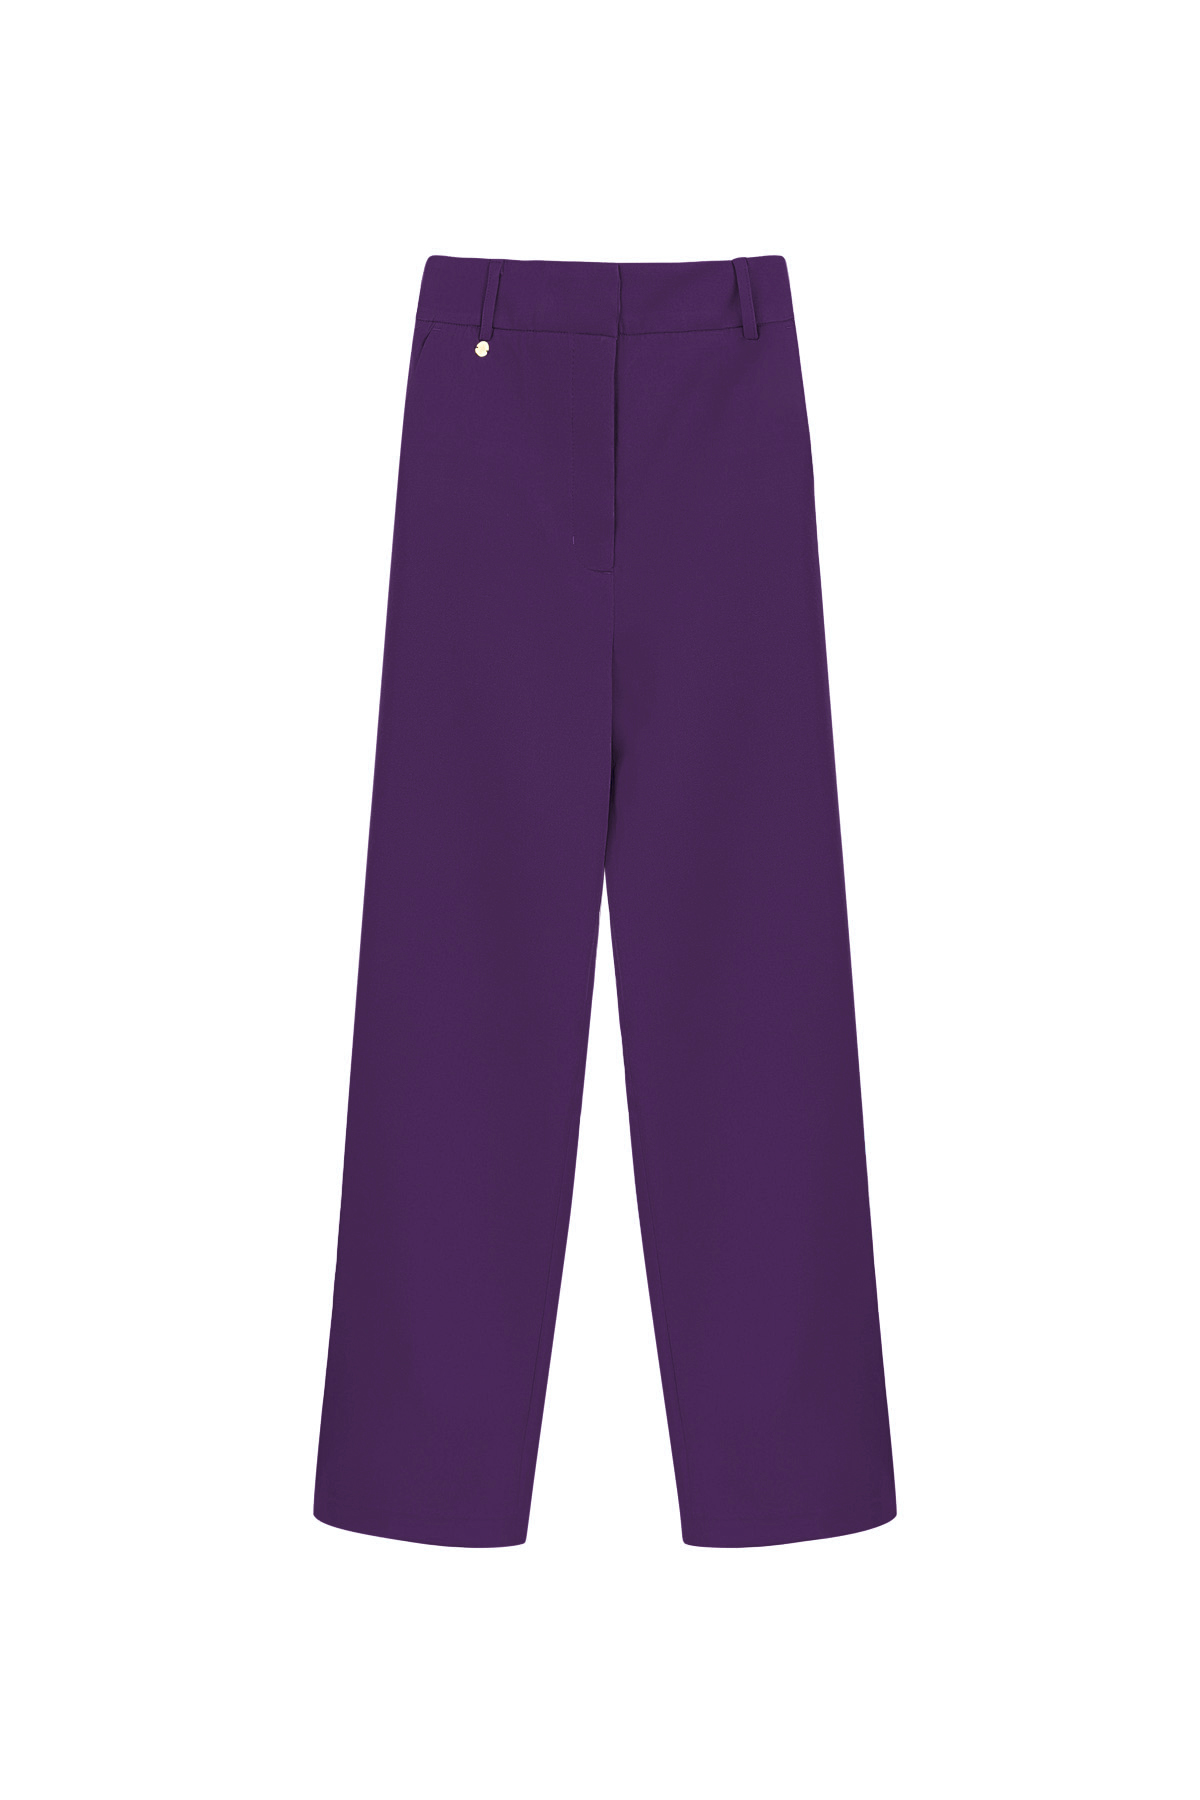 Purple / S 